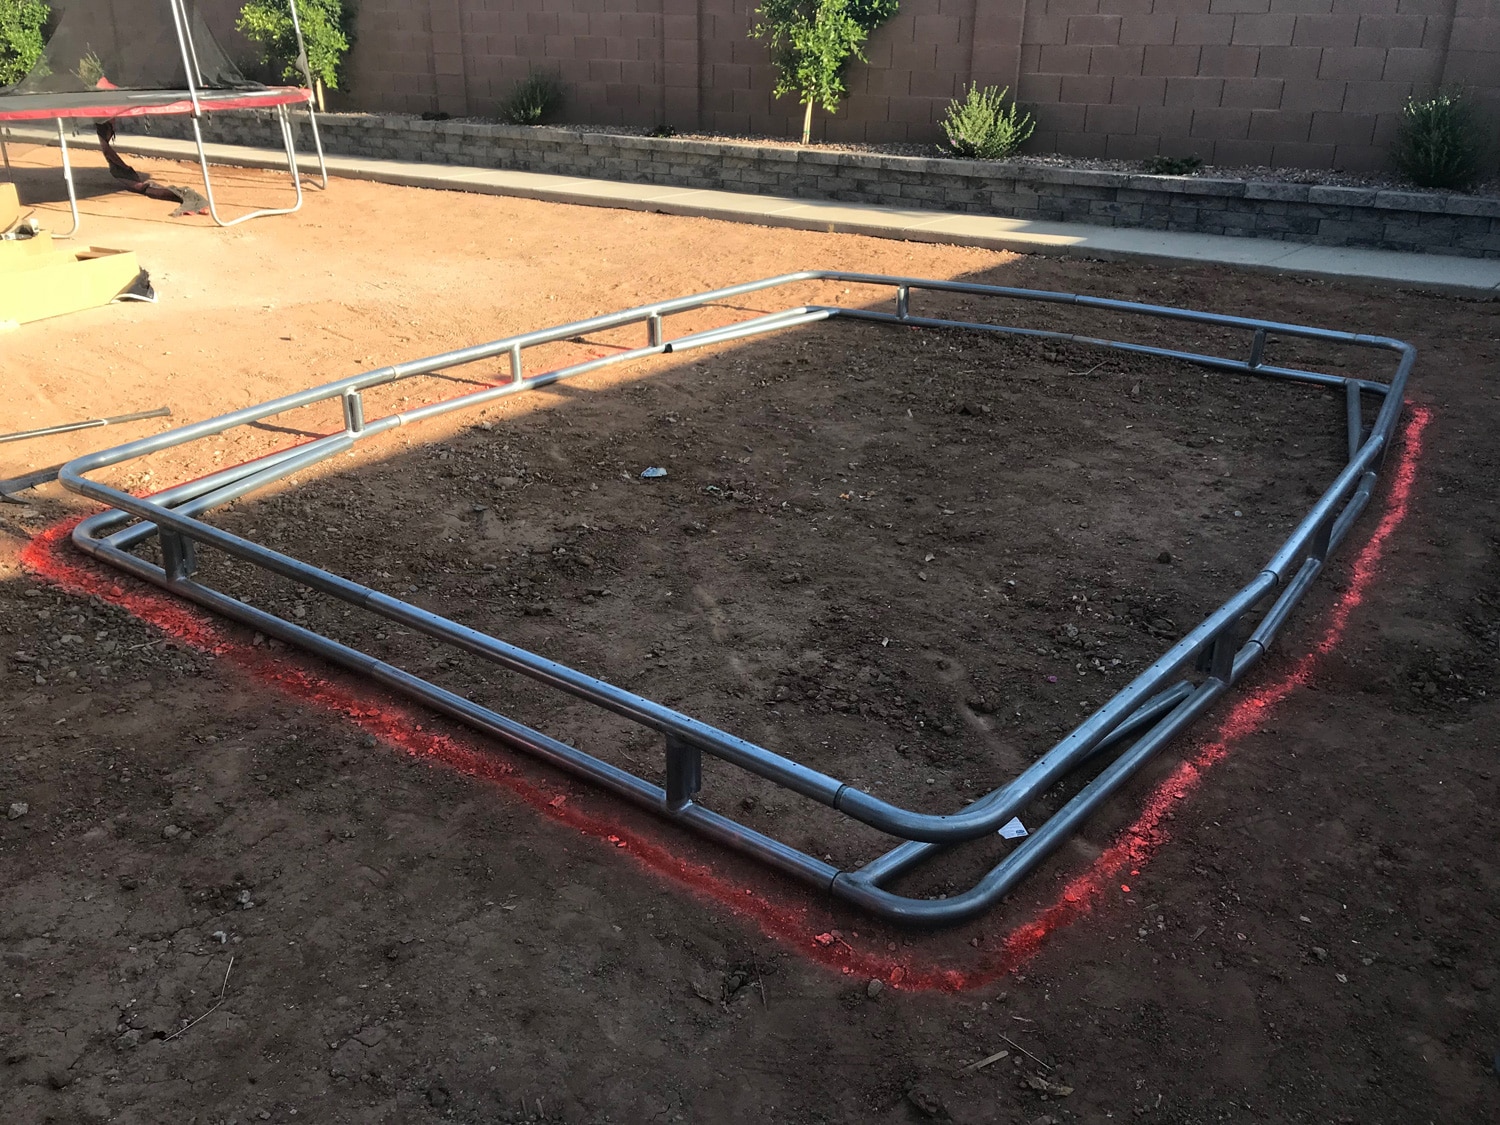 Patio steel frame marking for in-ground trampoline installation